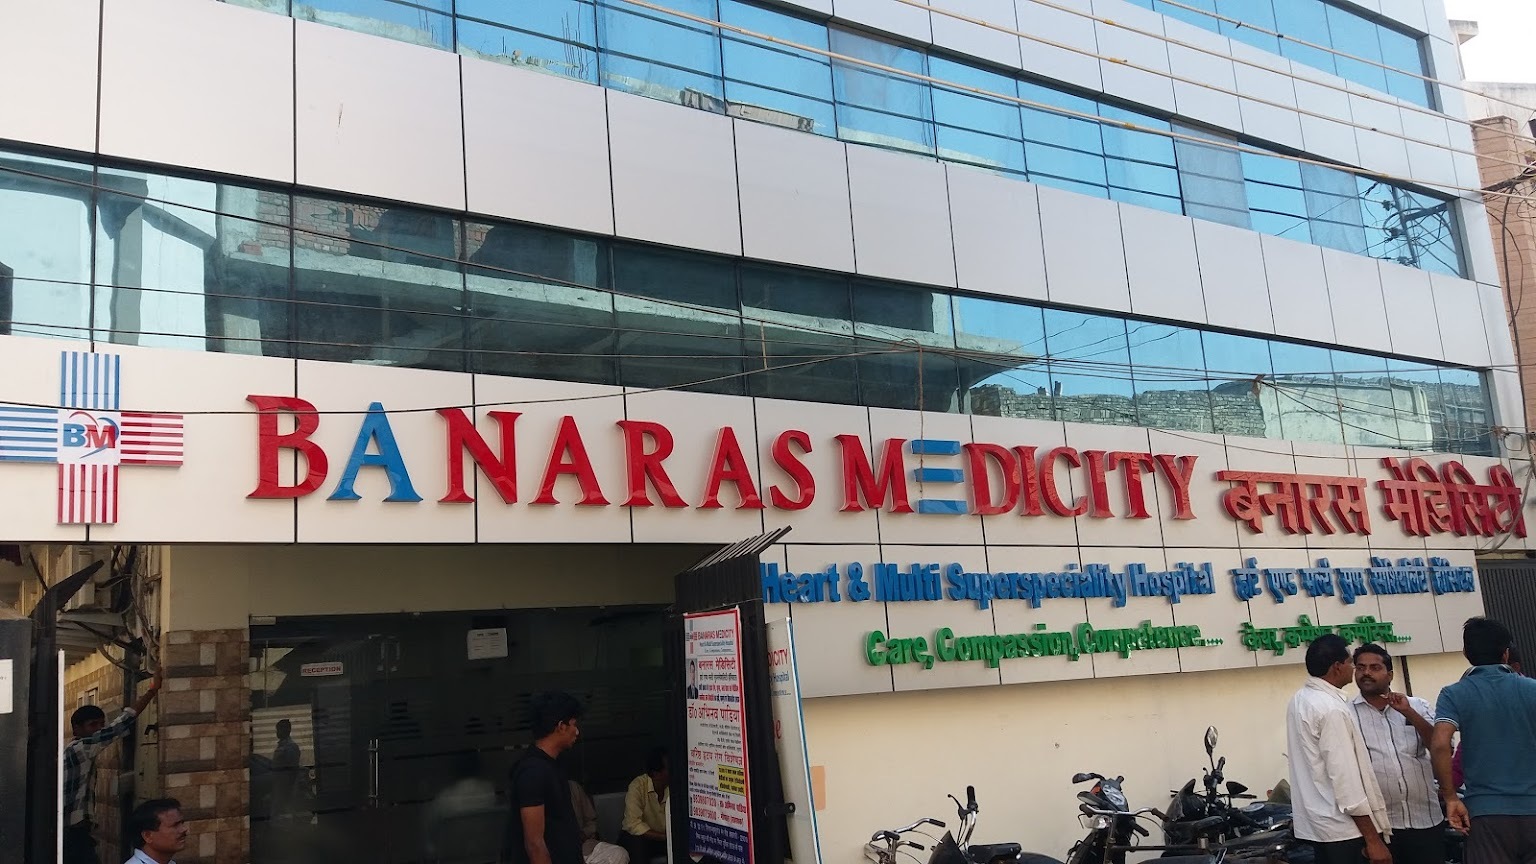 Banaras Medicity Heart And Super Multispeciality Hospital